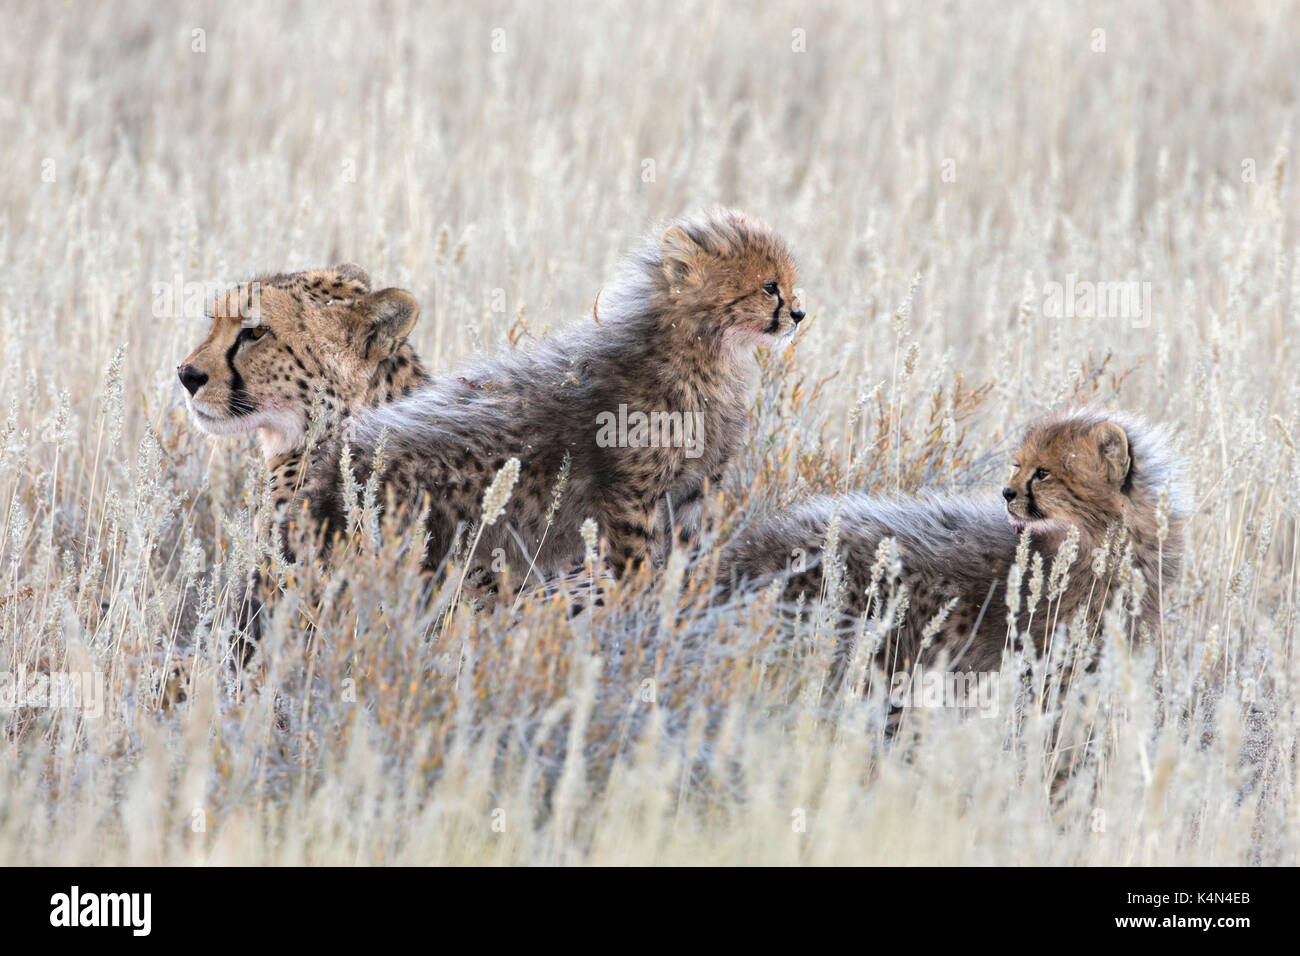 Cheetah (Acinonyx jubatus) with cubs, Kgalagadi Transfronter Park, Northern Cape, South Africa, Africa Stock Photo